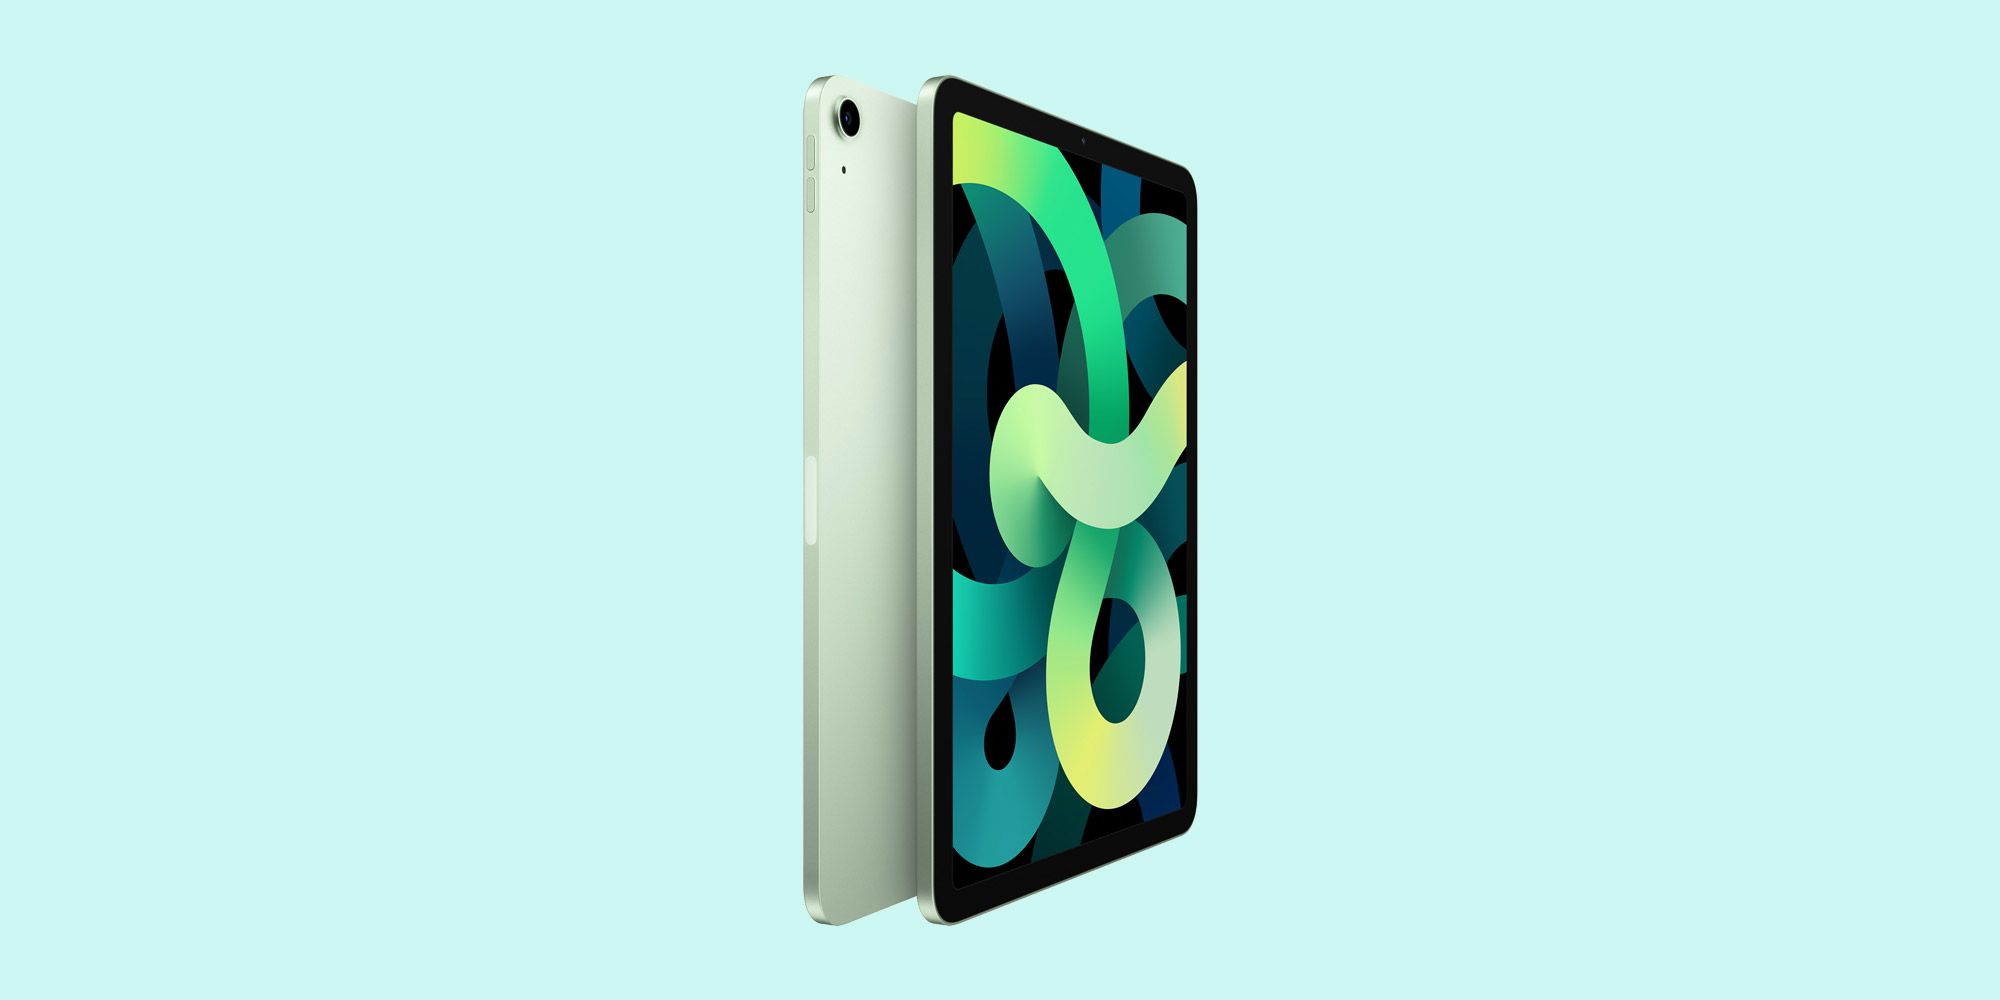 Apple iPad Air (2020): Should you buy it?